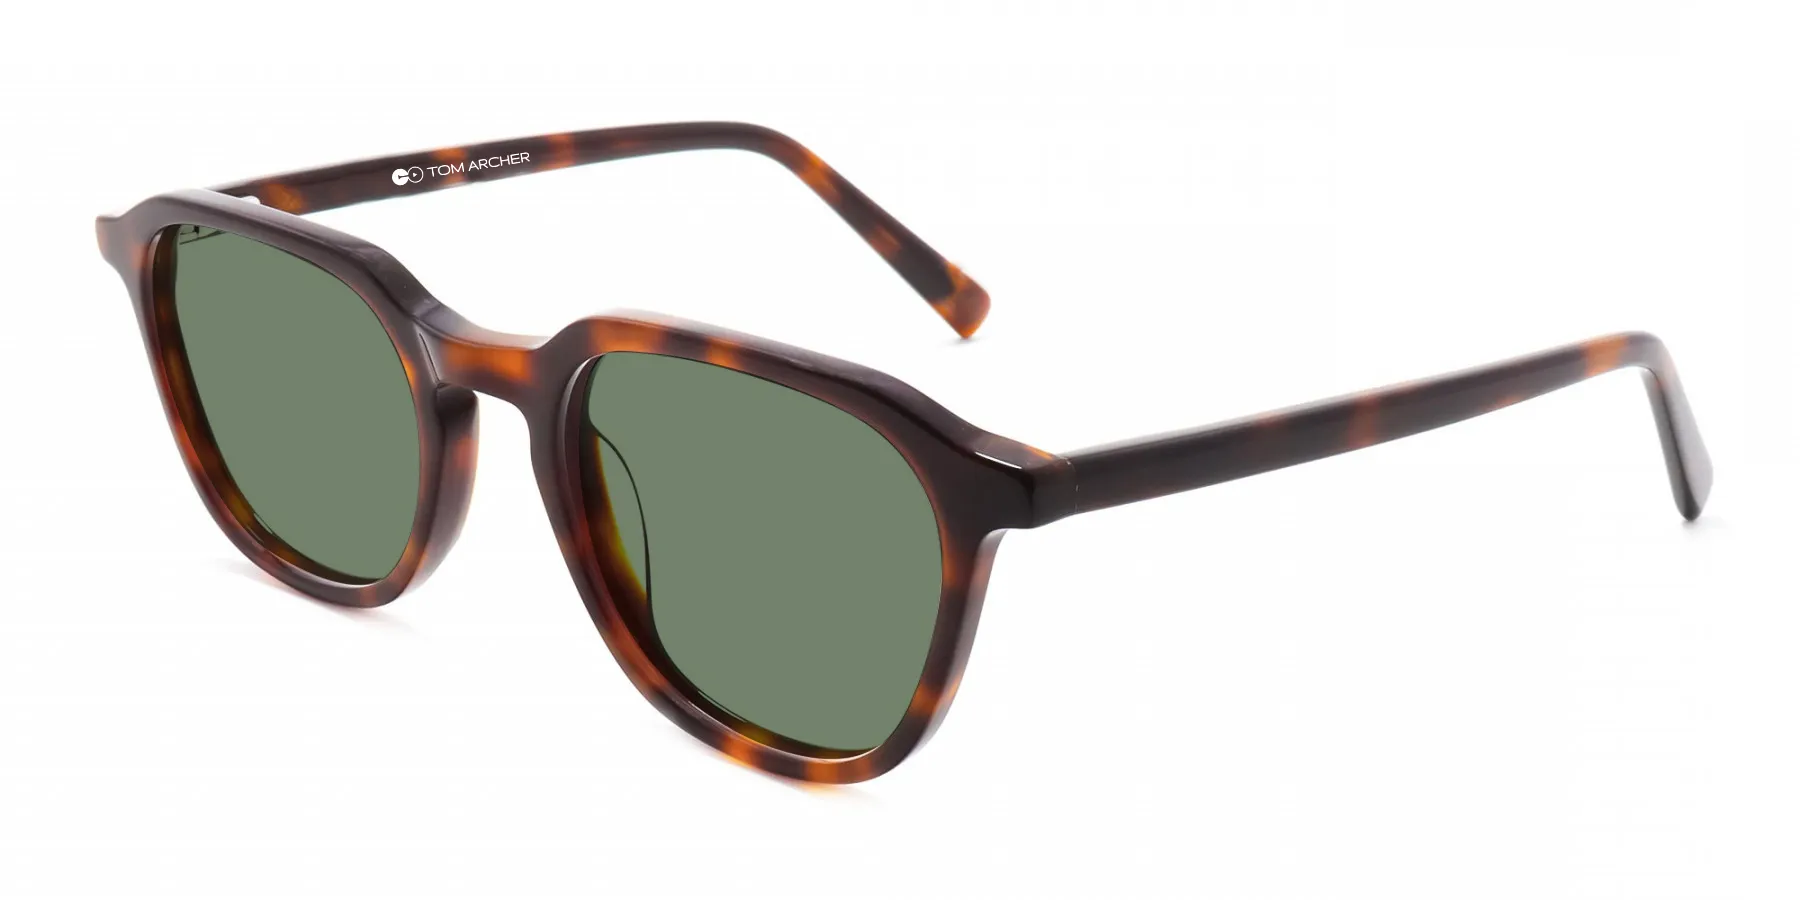 Geometric Shape Sunglasses With Green Tint-1